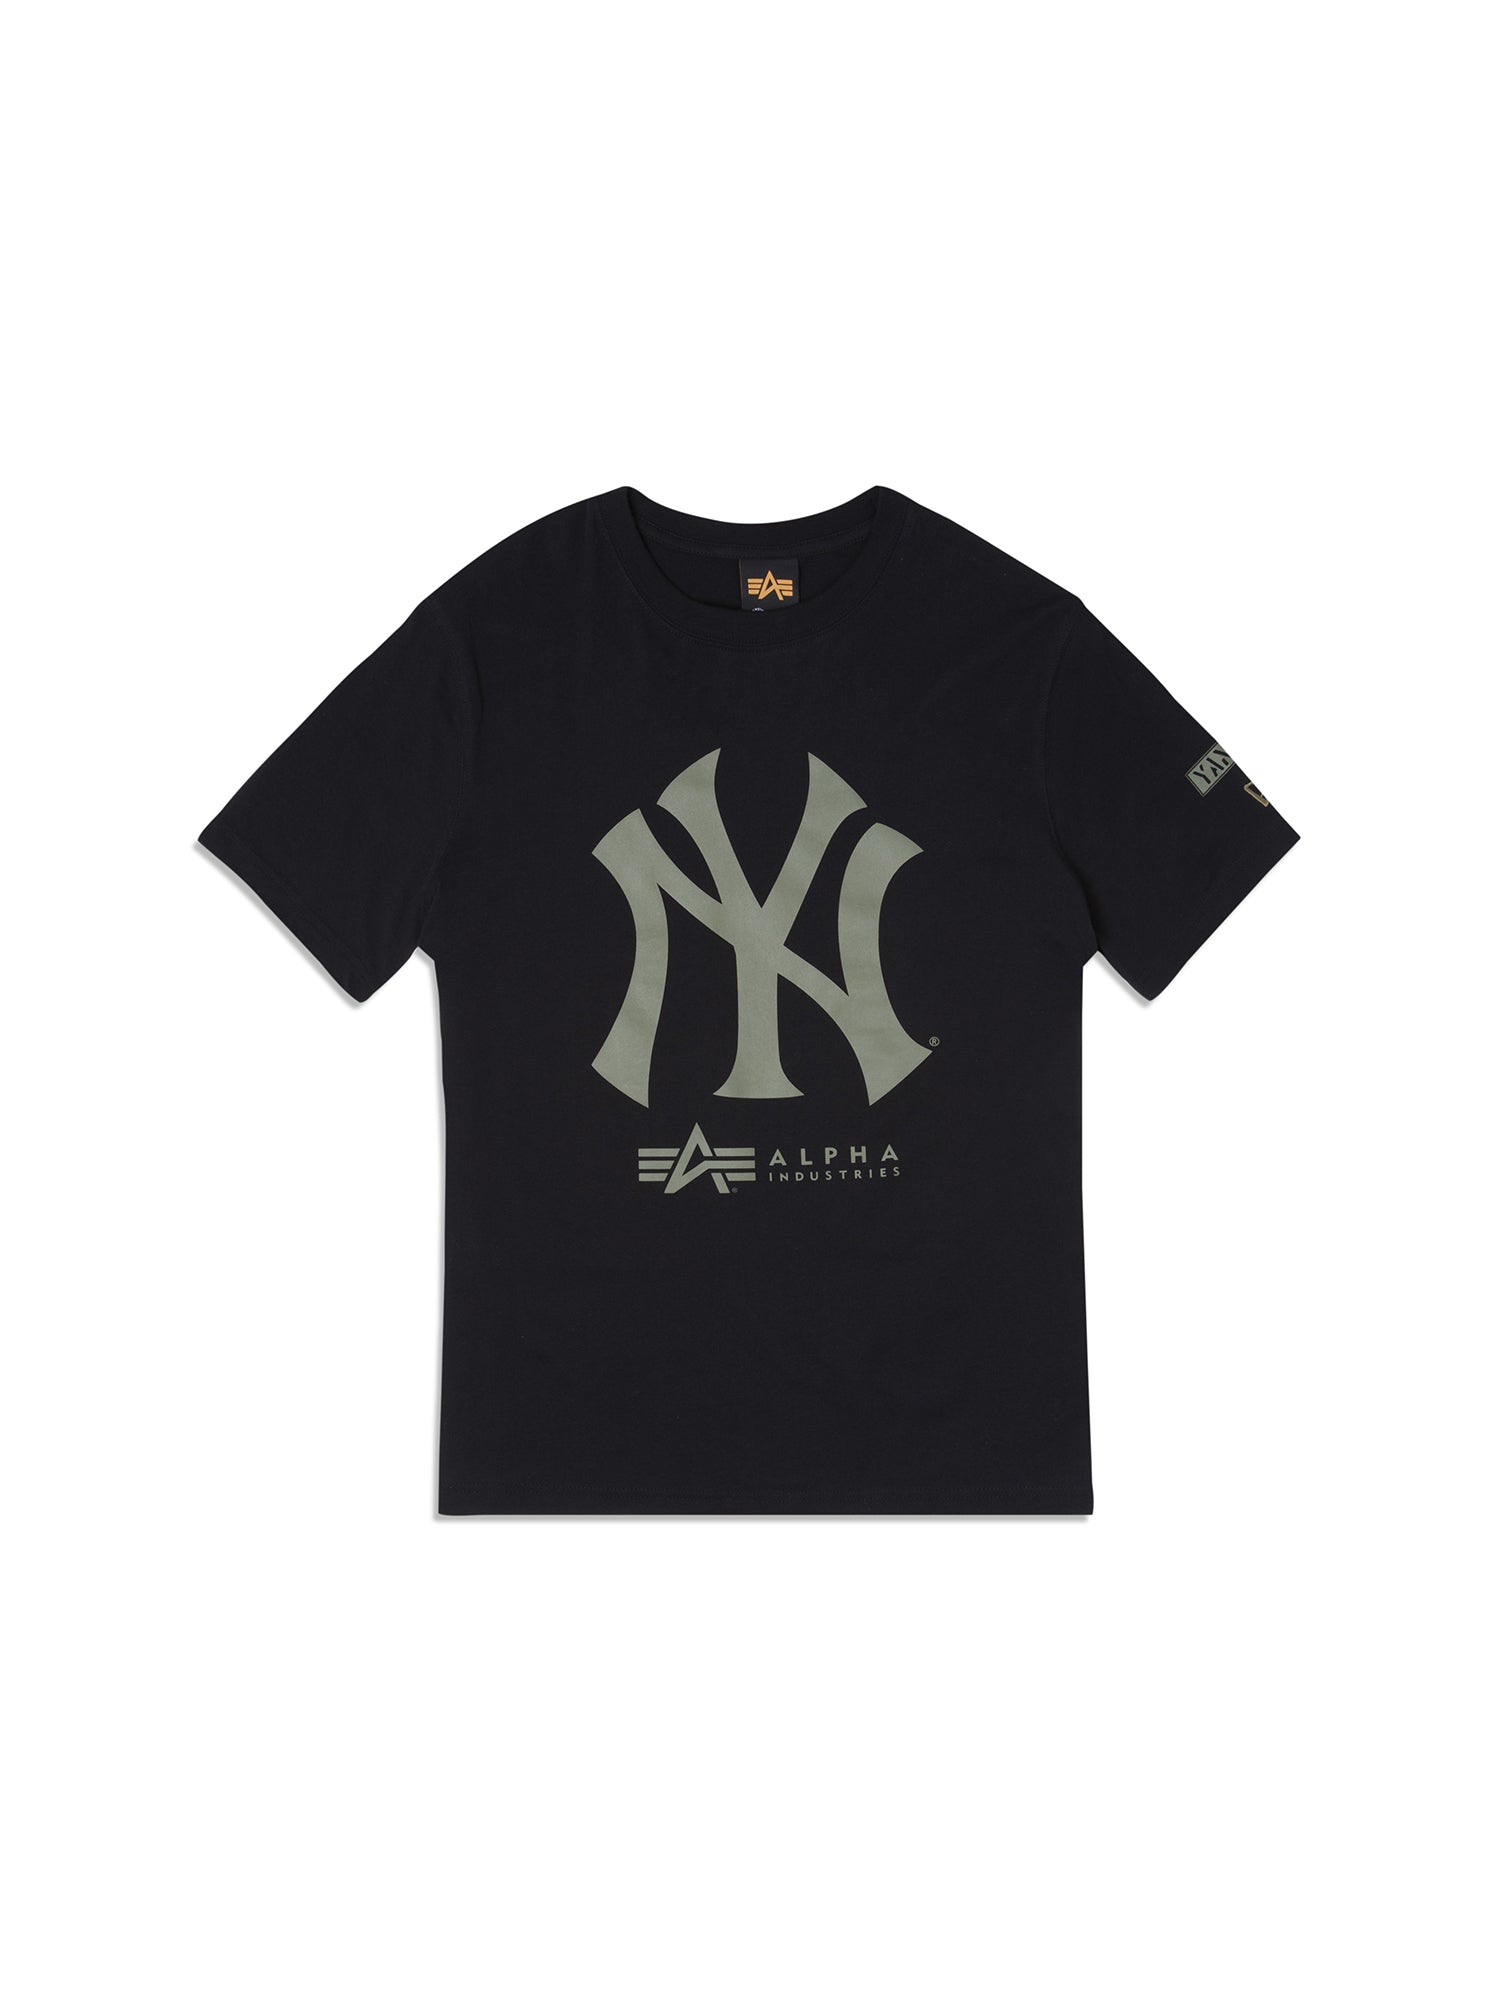 New Era Men's x Alpha Industries Yankees T-Shirt in Black - Size Medium